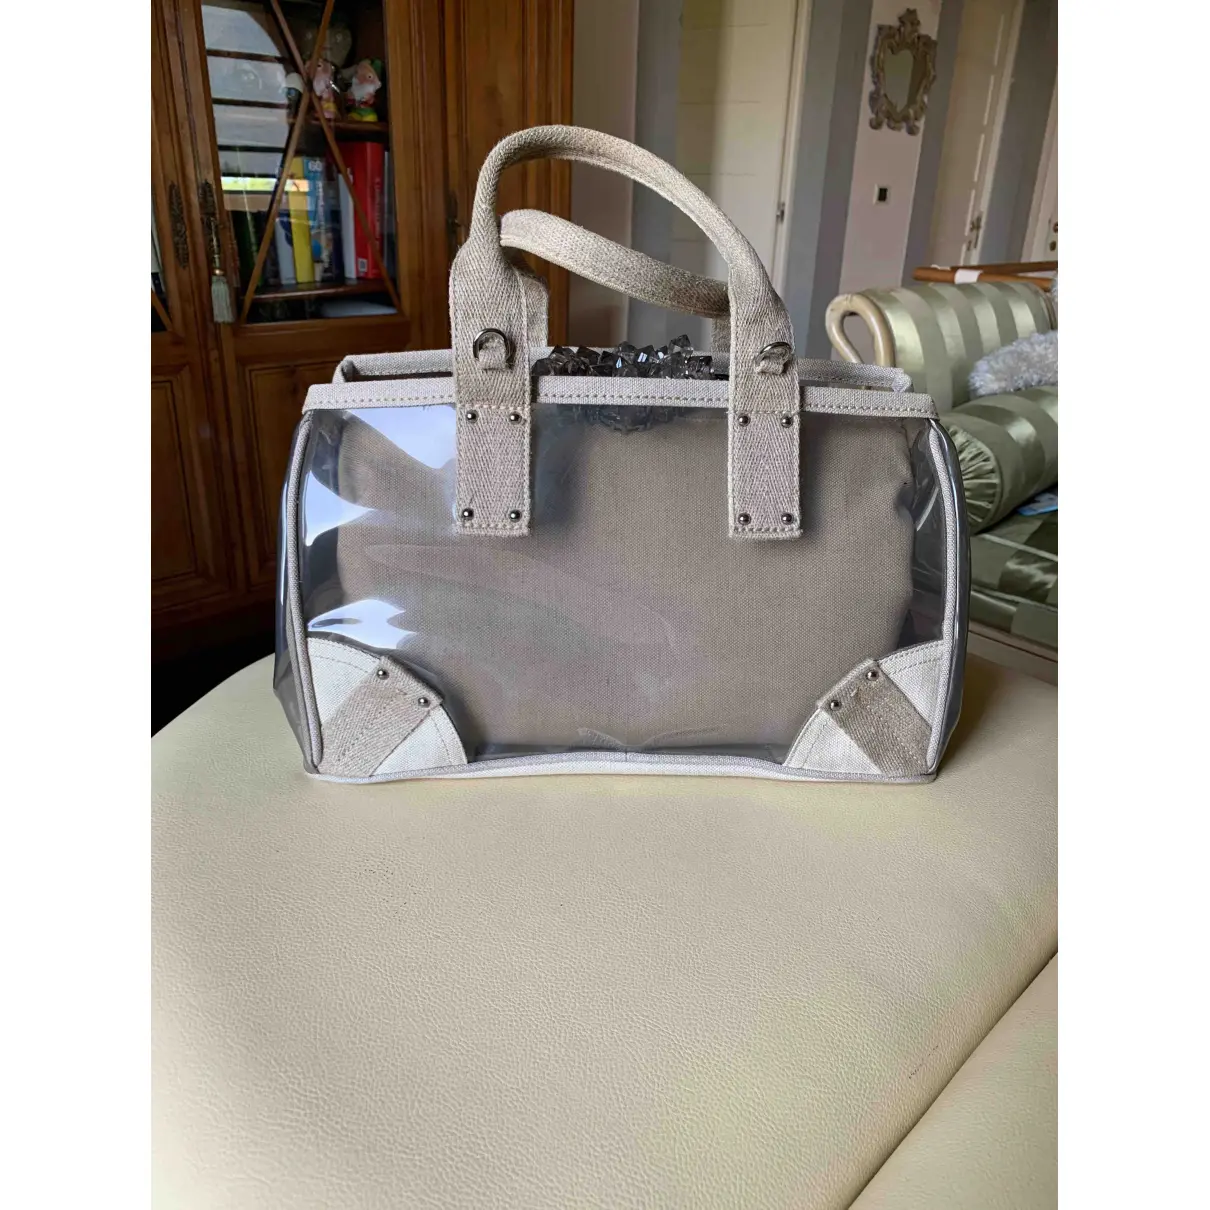 Buy Prada Ouverture handbag online